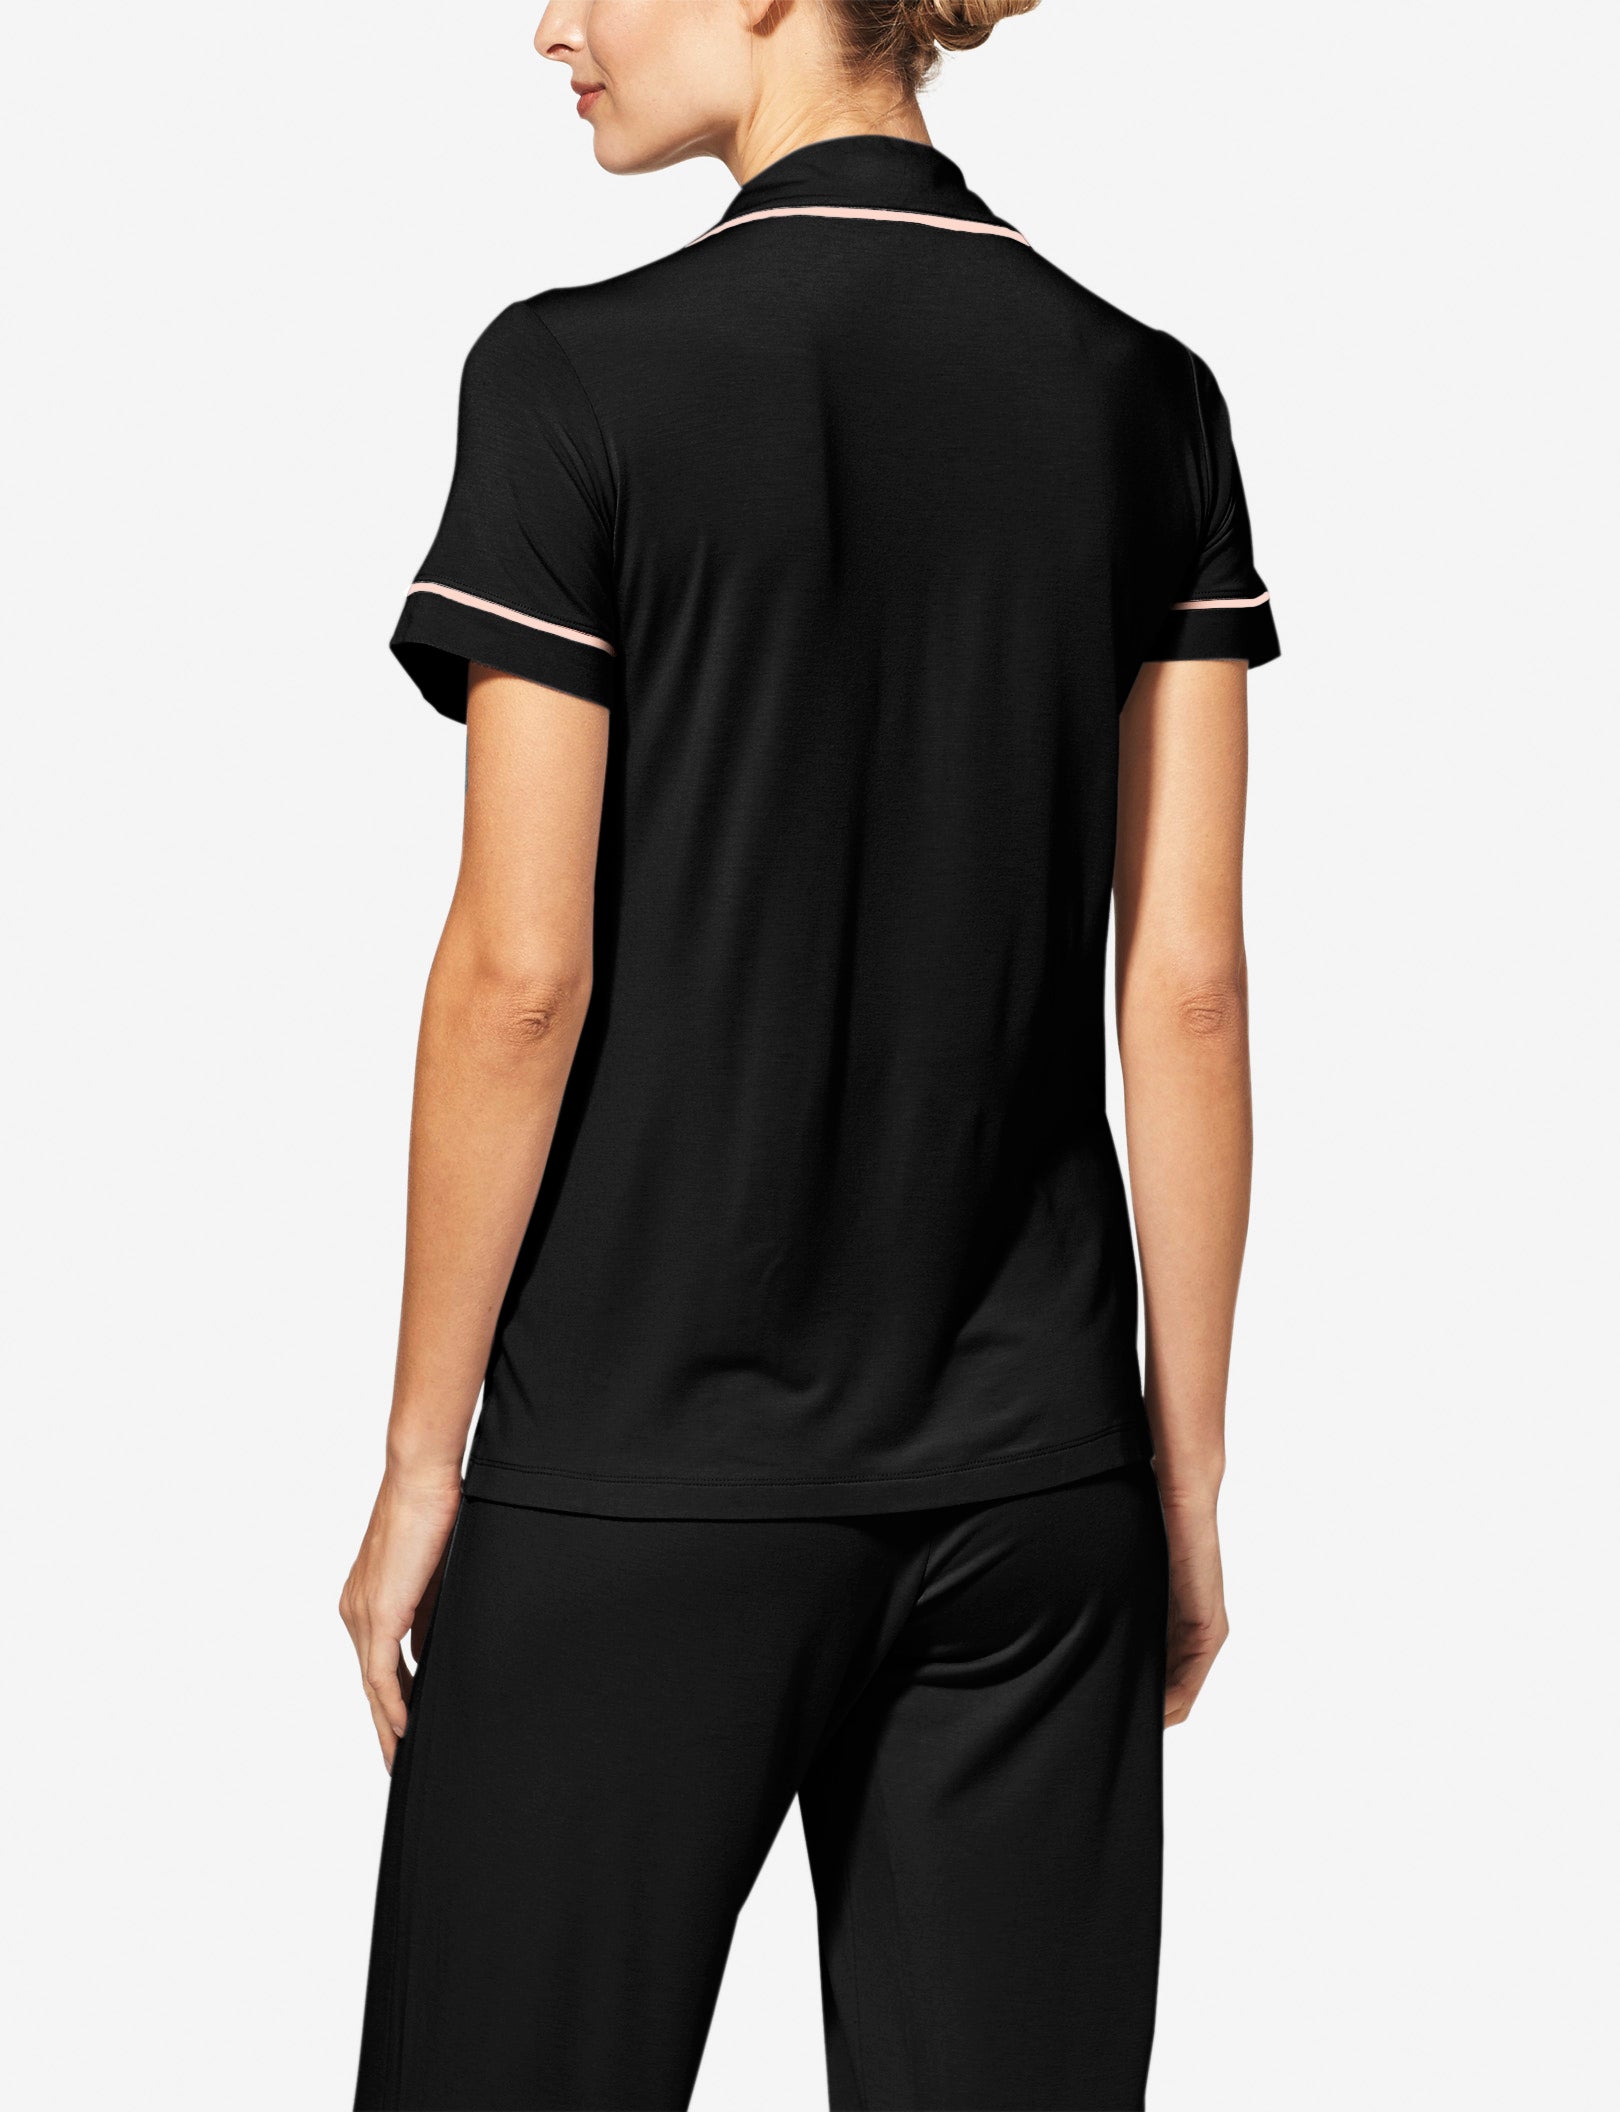 Women's Short Sleeve Top & Pant Pajama Set, Black